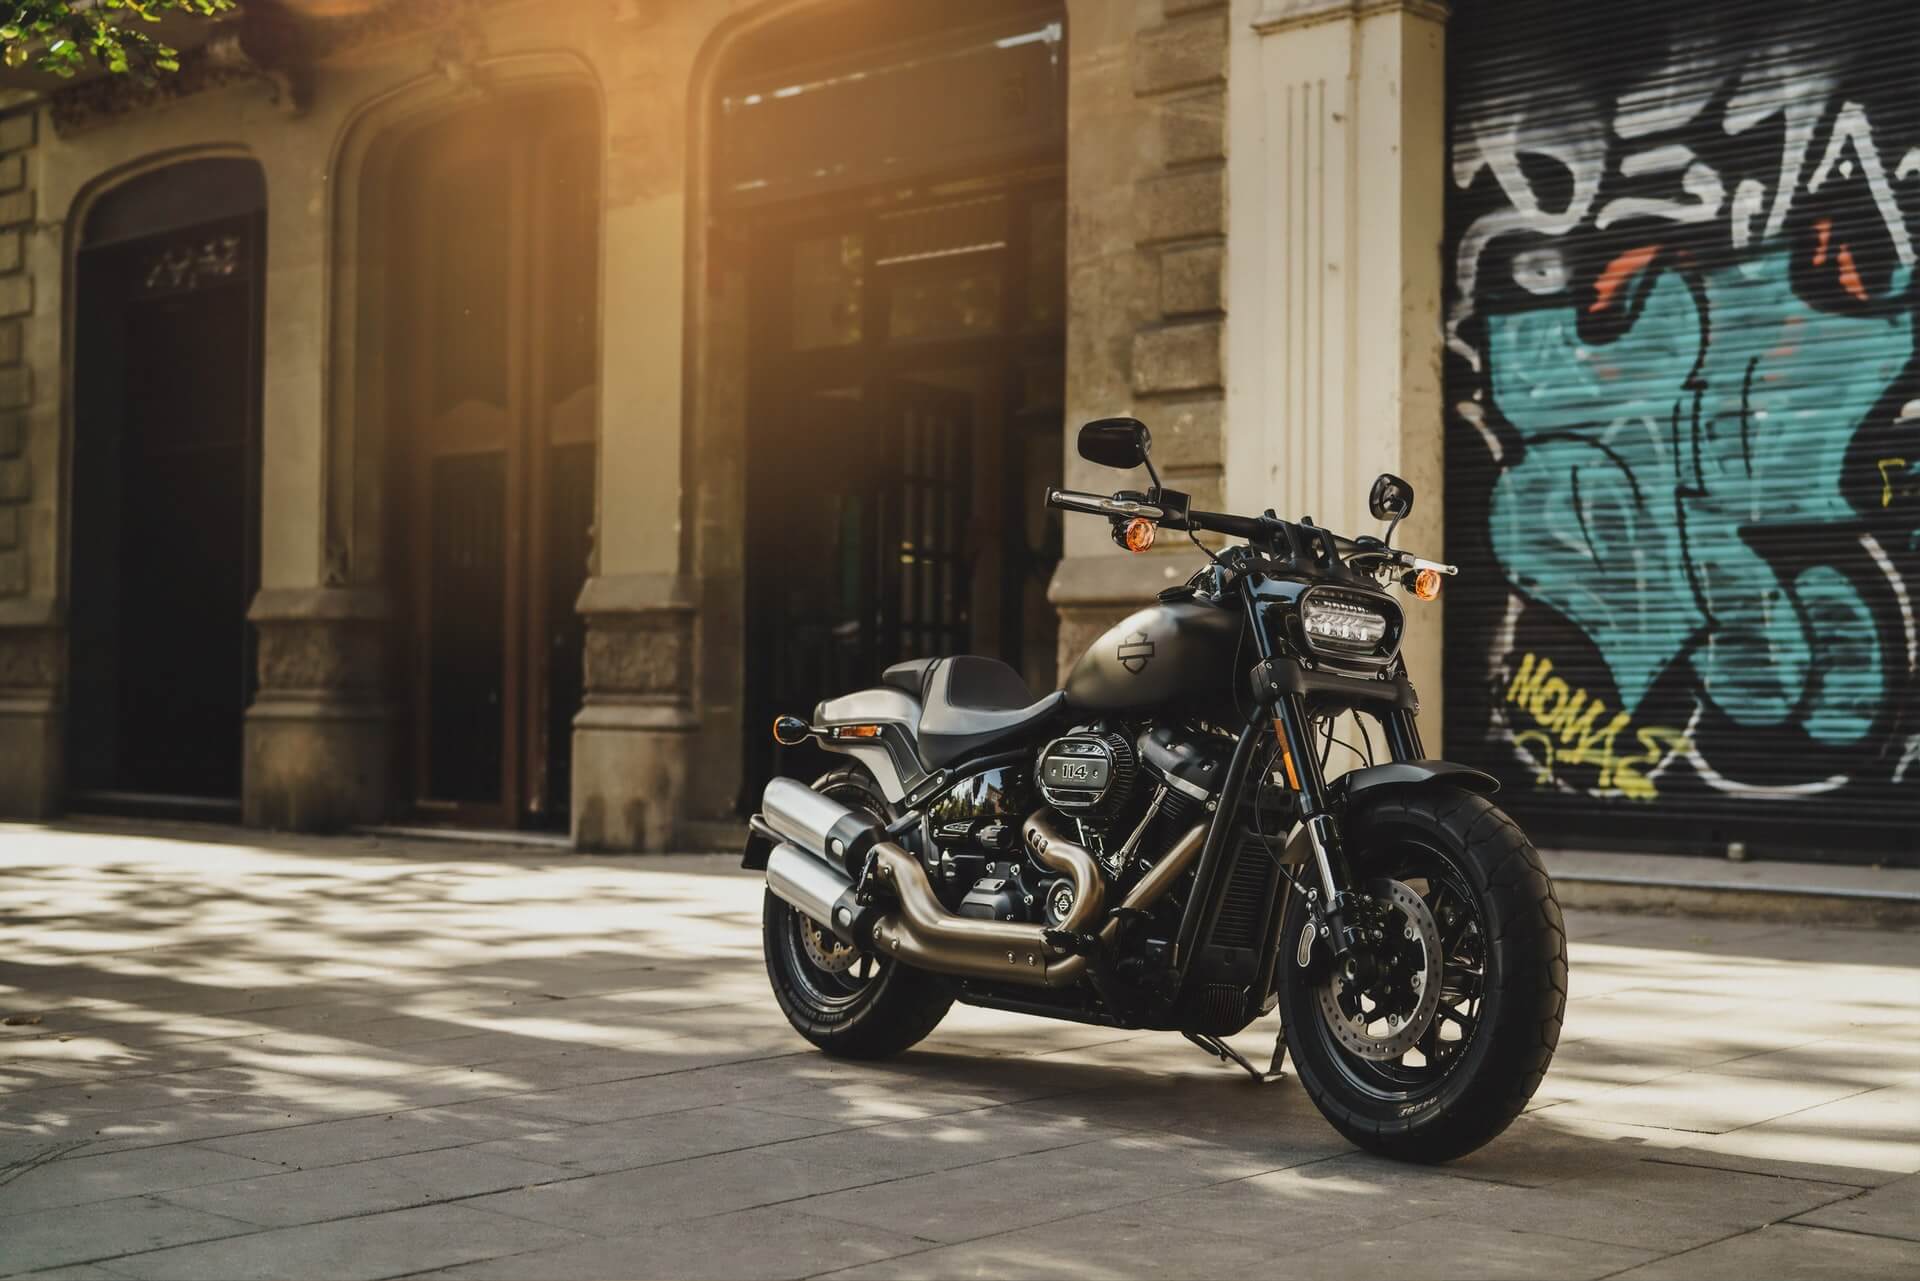 Cool Harley Davidson motorcycle